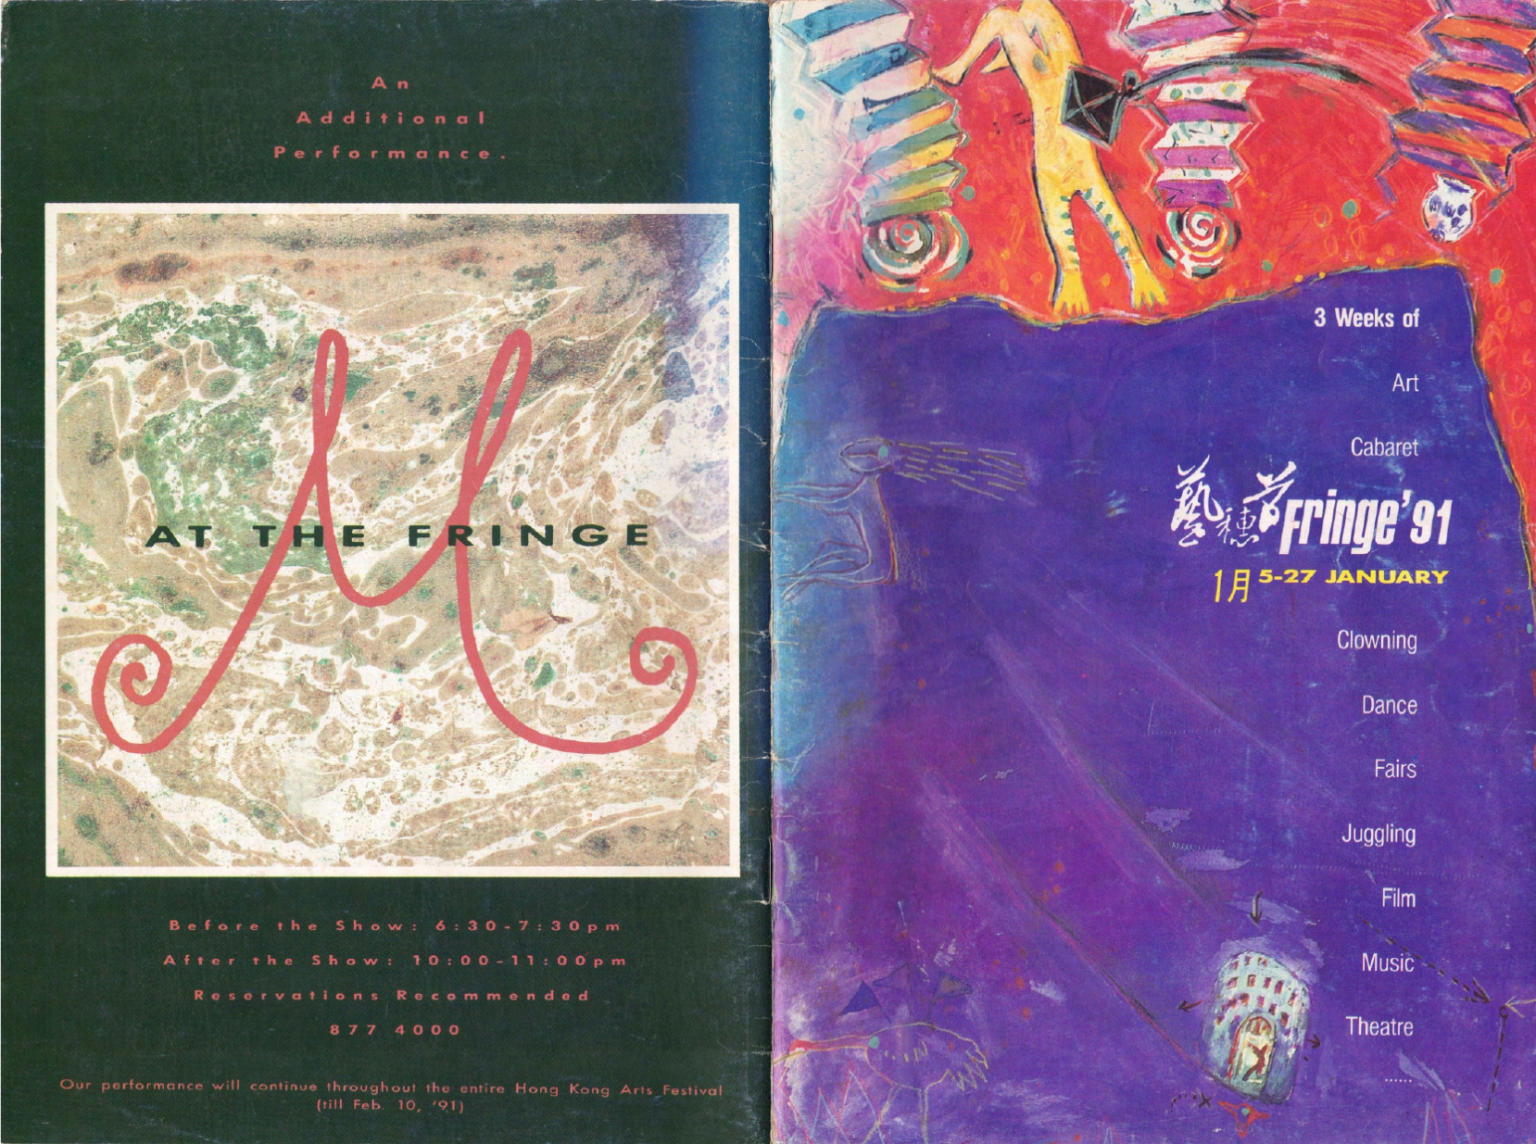 Fringe’91 – Videotage – 1990/91 Deep Dish and the Others – Brochure 藝穗會91- 錄映太奇- 深碟及其他 – 小冊子